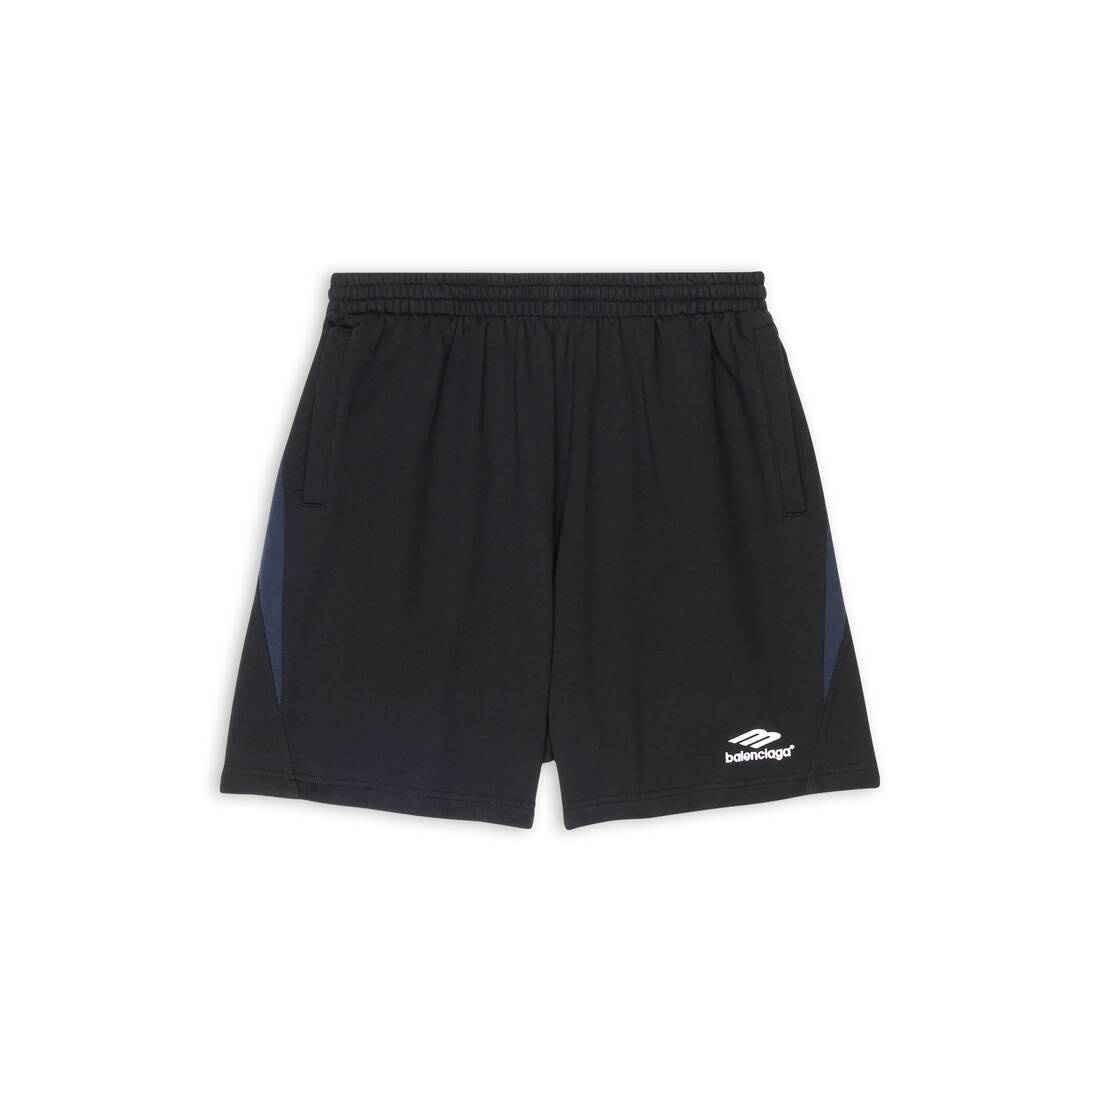 3b sports icon tracksuit shorts - 1